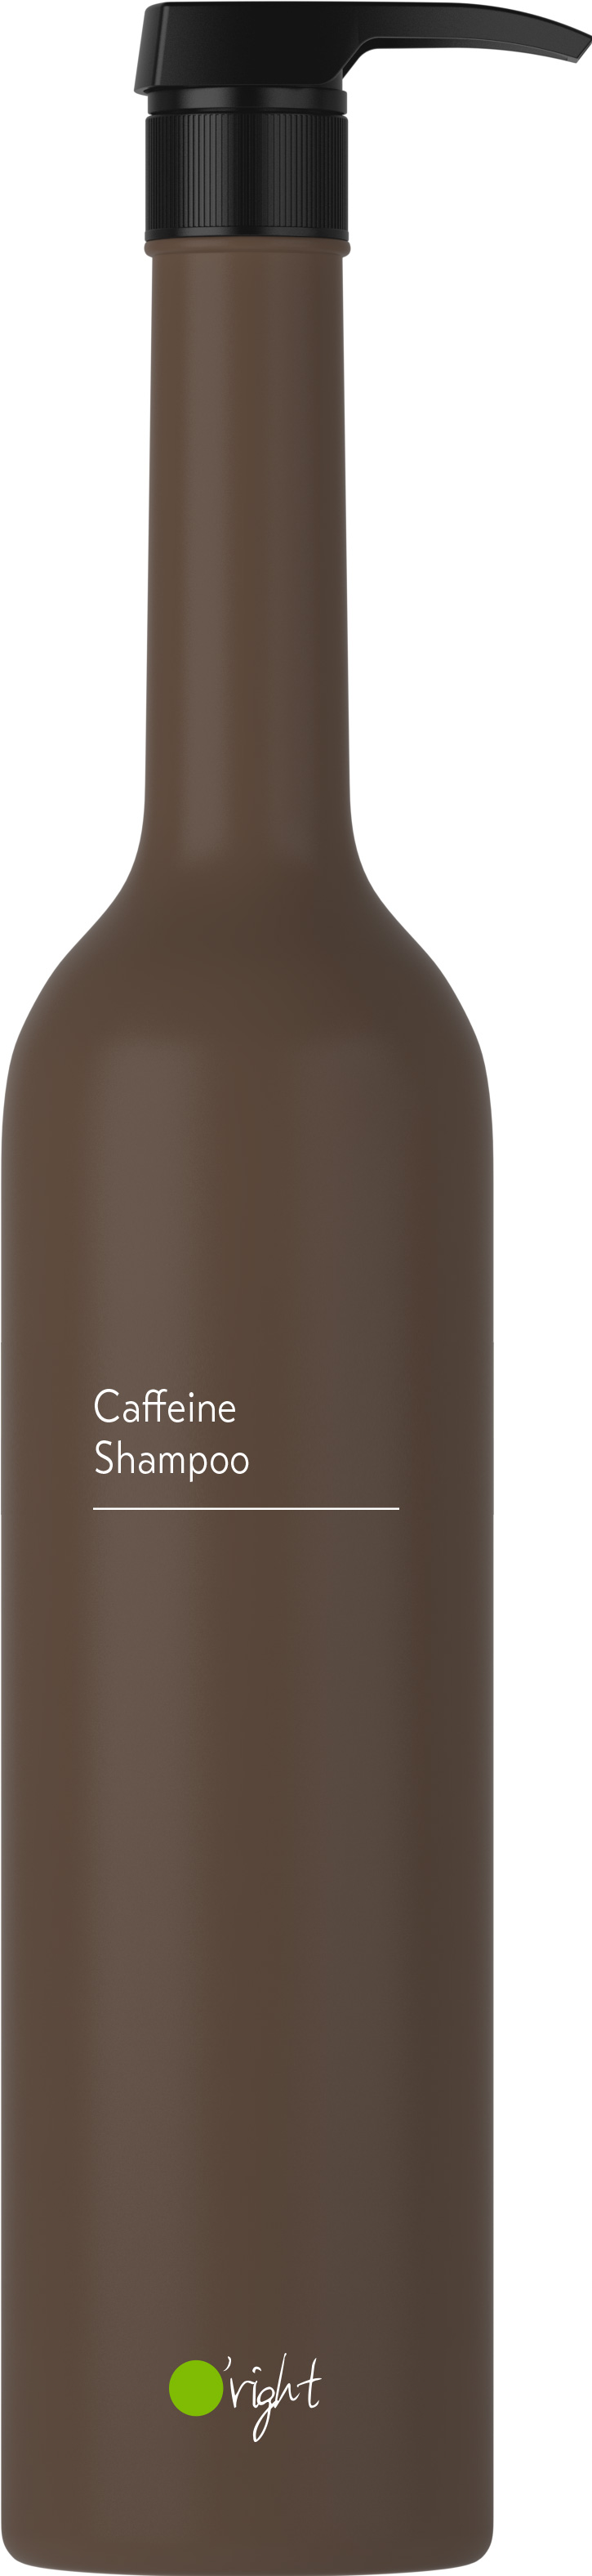 Beauty News, O’right, โอไรท์, แบรนด์ความงาม,​ แบรนด์ไต้หวัน, Organic, ออร์แกนิค, Vegan, วีแกน, Zero Carbon, Caffeine Shampoo, Caffeine Conditioner, Caffeine Botanical Scalp Revitalizer, Green tea Shampoo (Forest Green Edition), Wild Rose Hair Oil, Yogurt Hair Mask, ราคา, เท่าไร